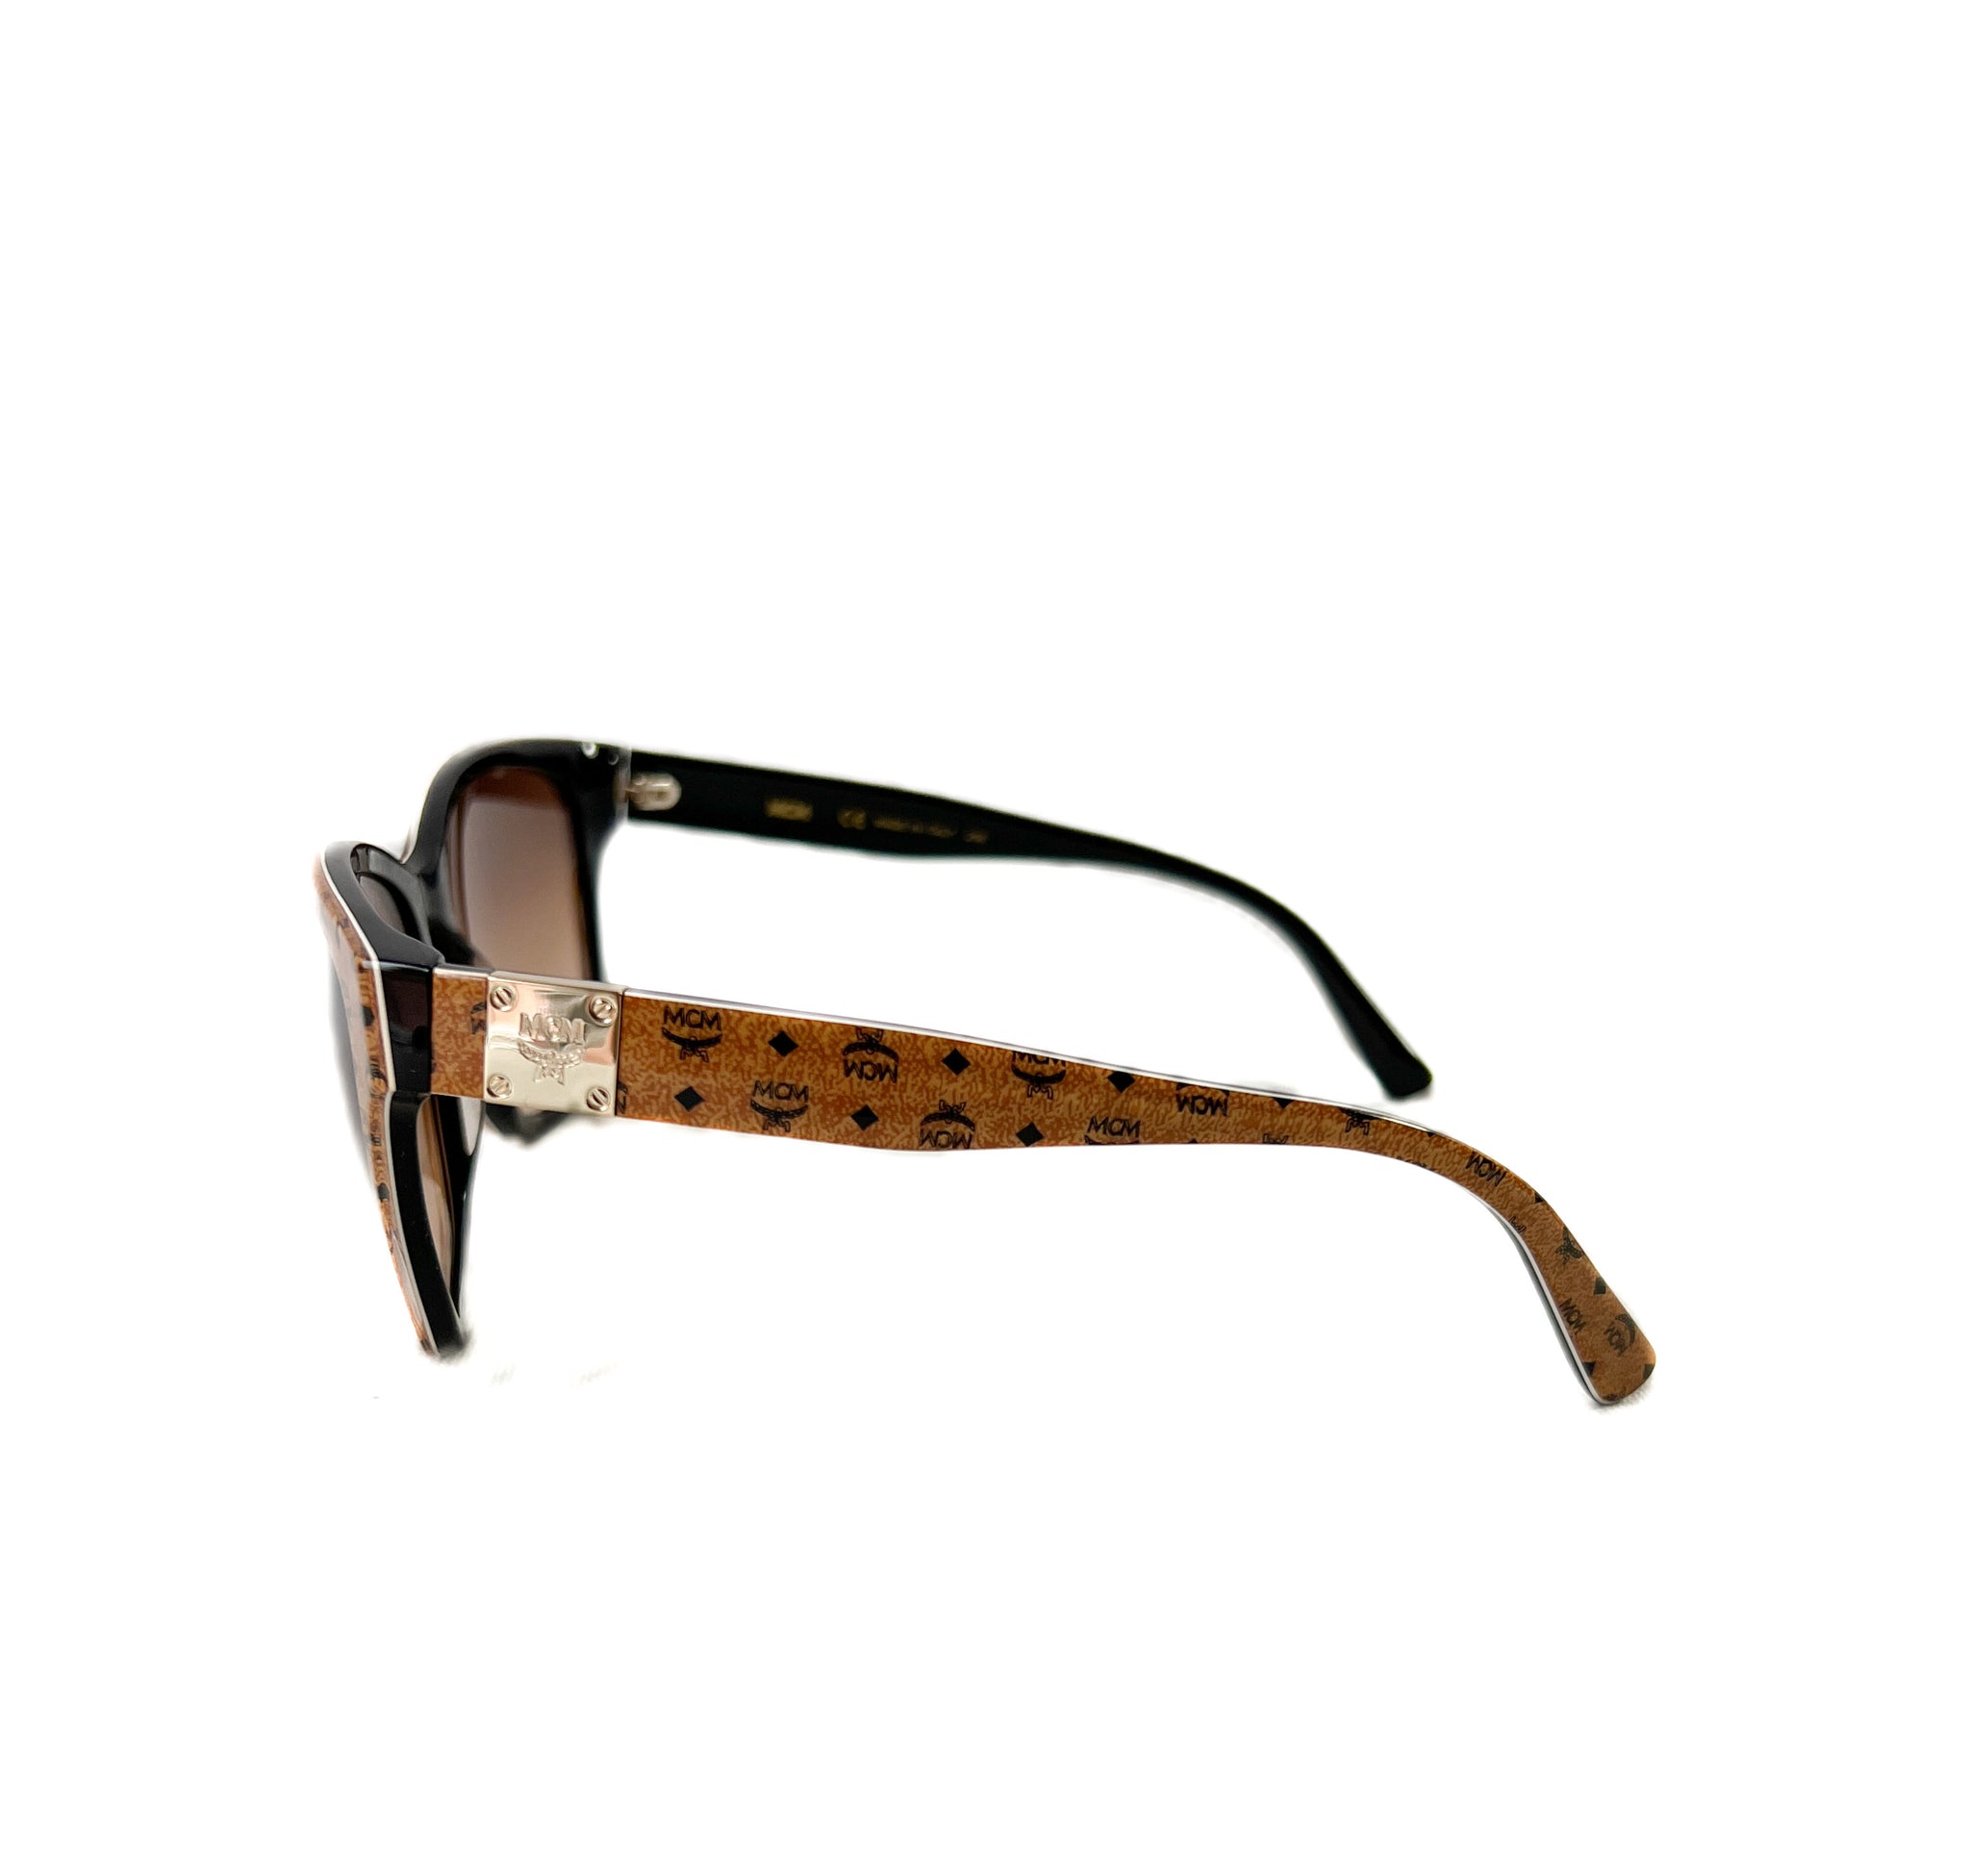 Mcm sunglasses - Free shipping